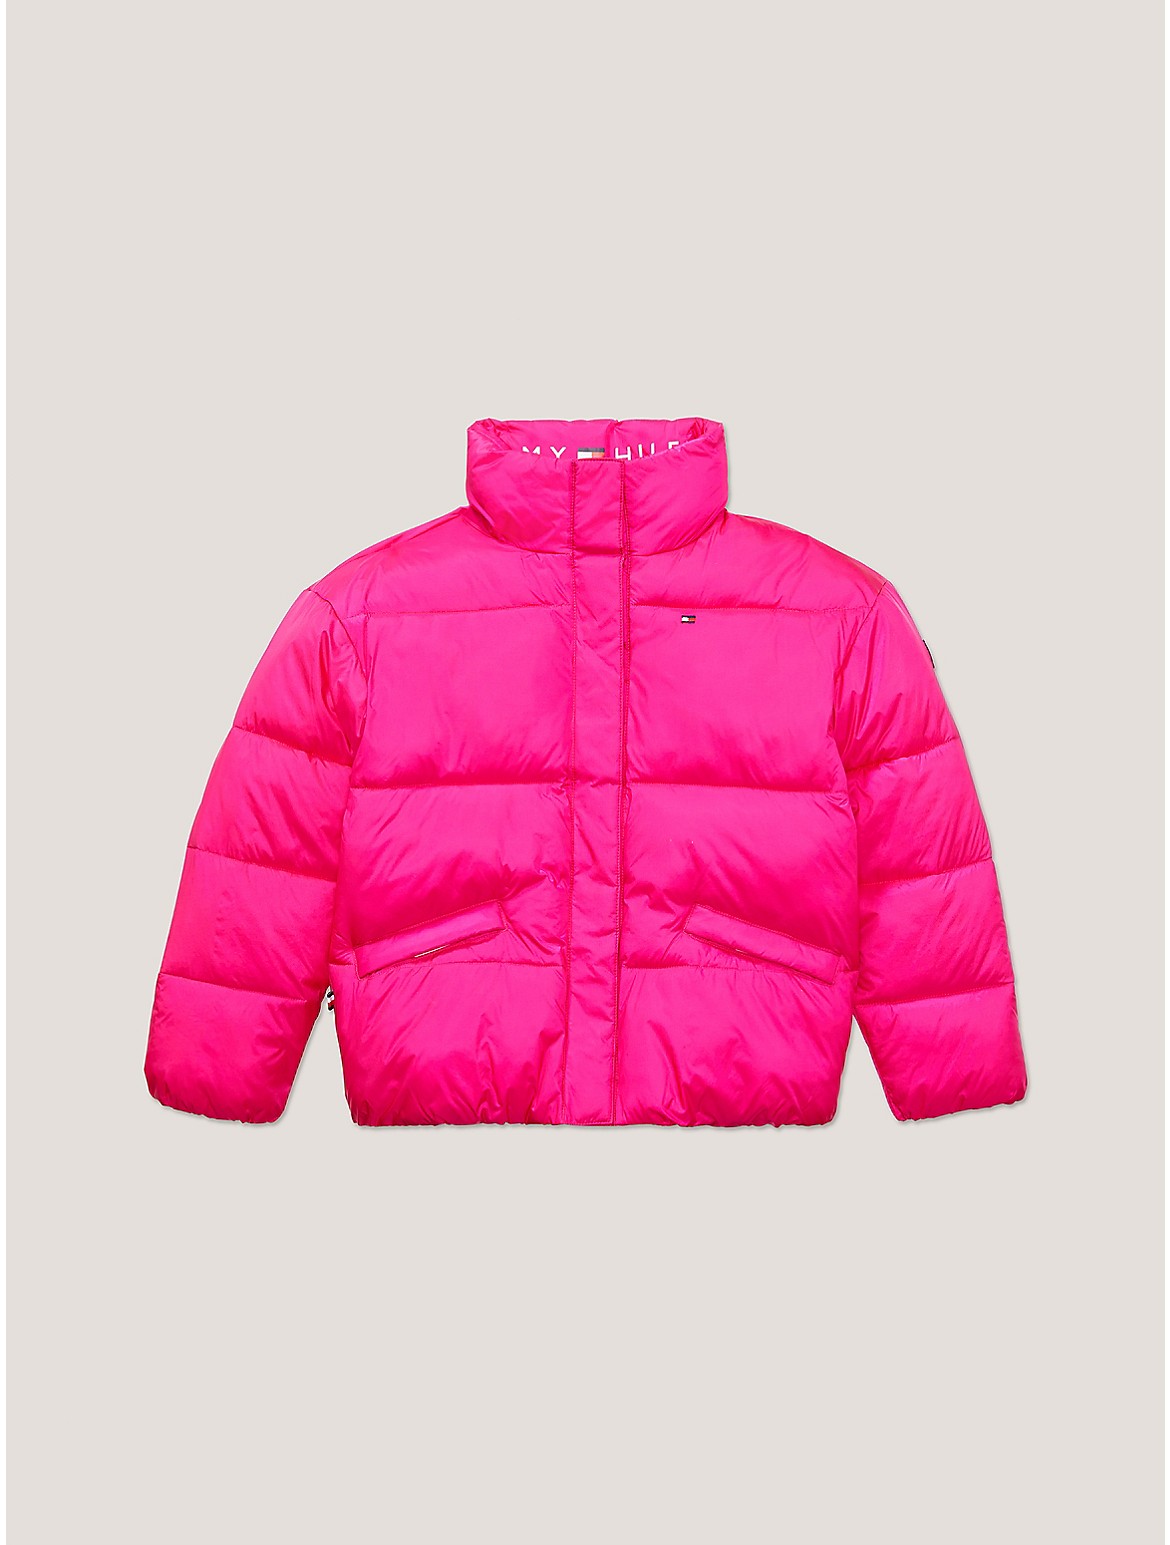 Tommy Hilfiger Girls' Kids' Shine Puffer Jacket